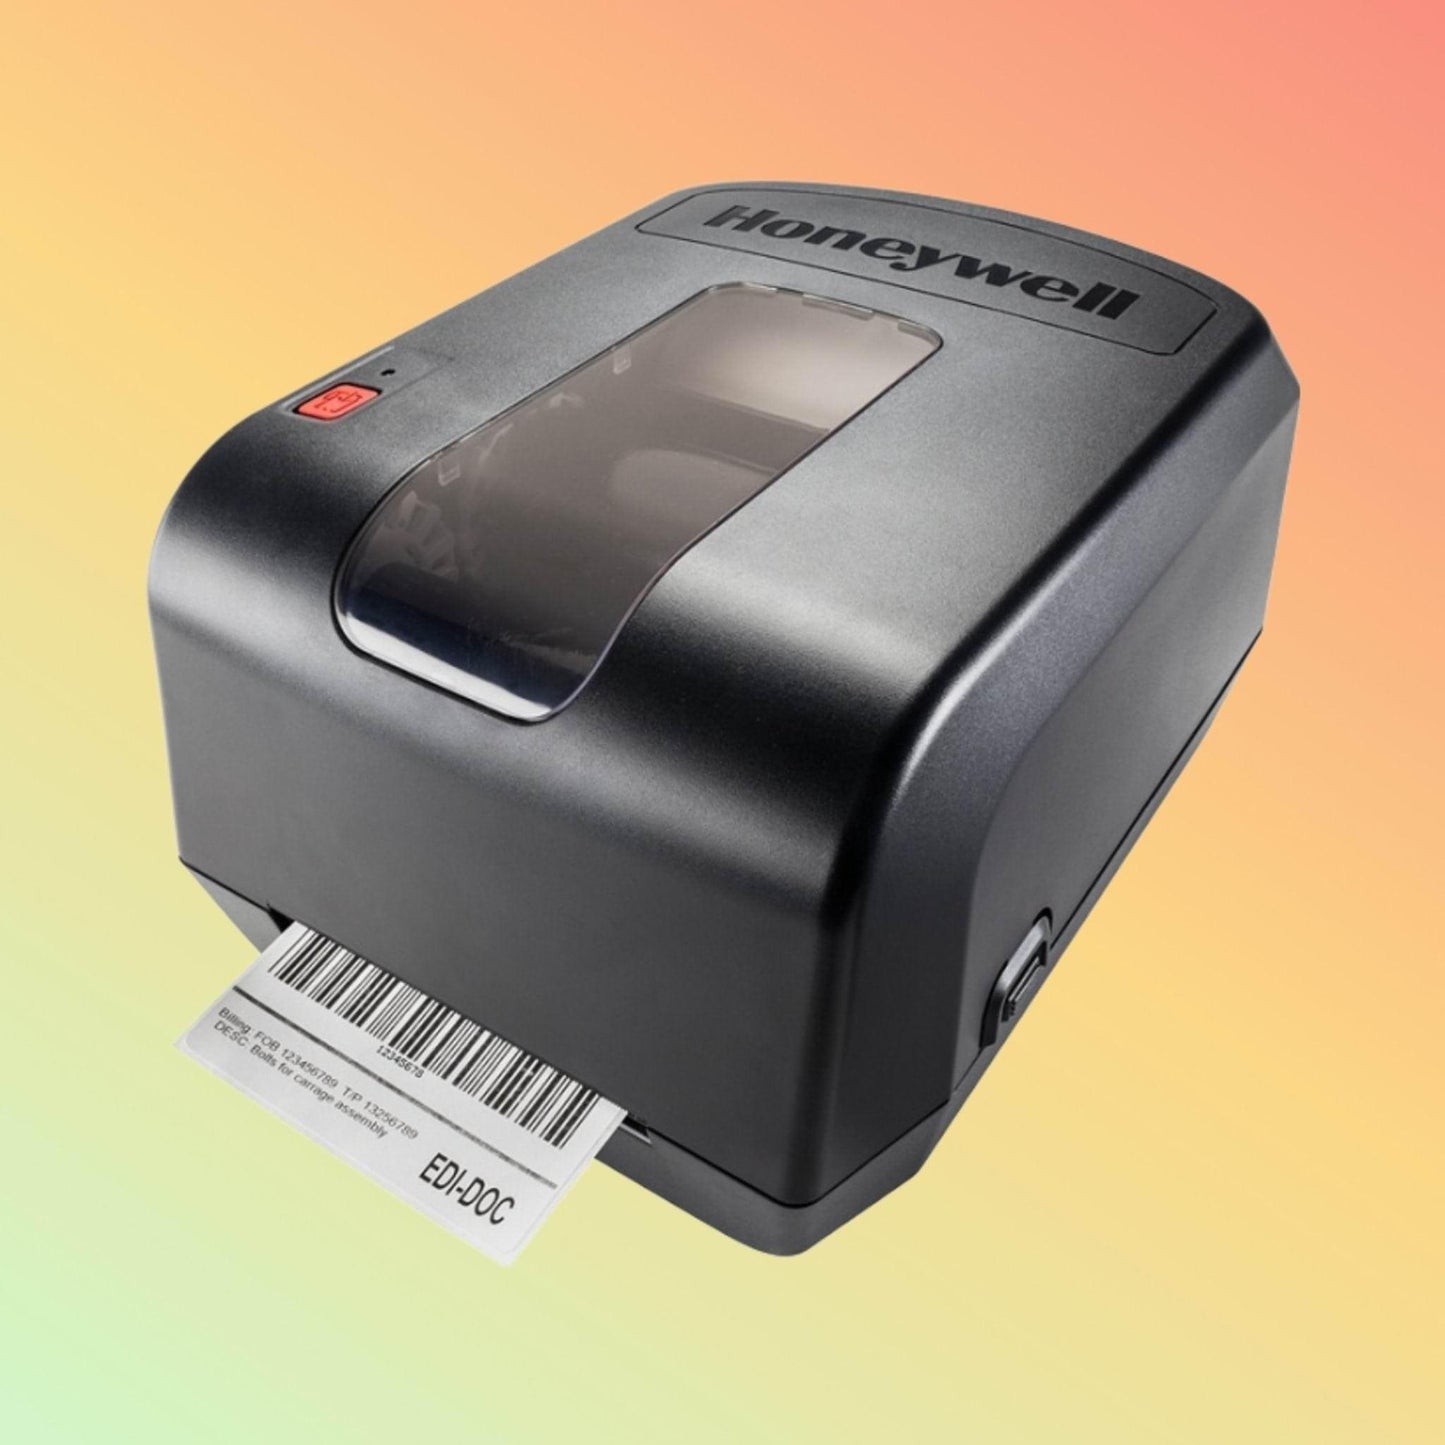 Barcode Printer - Honeywell PC42T - Neotech